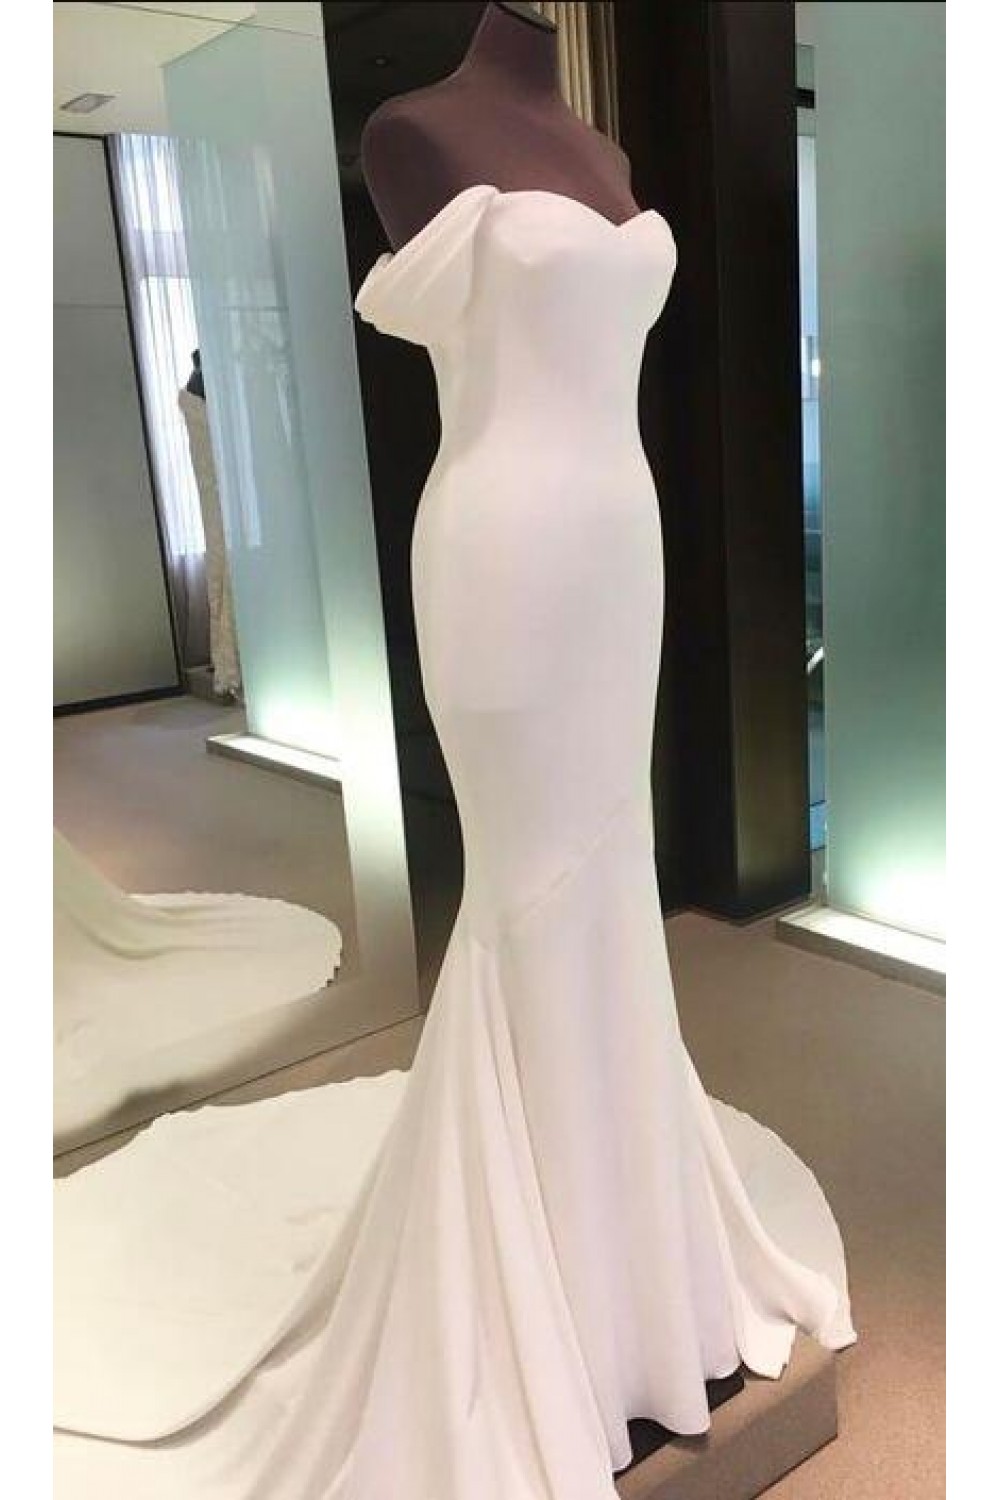 white prom dress long